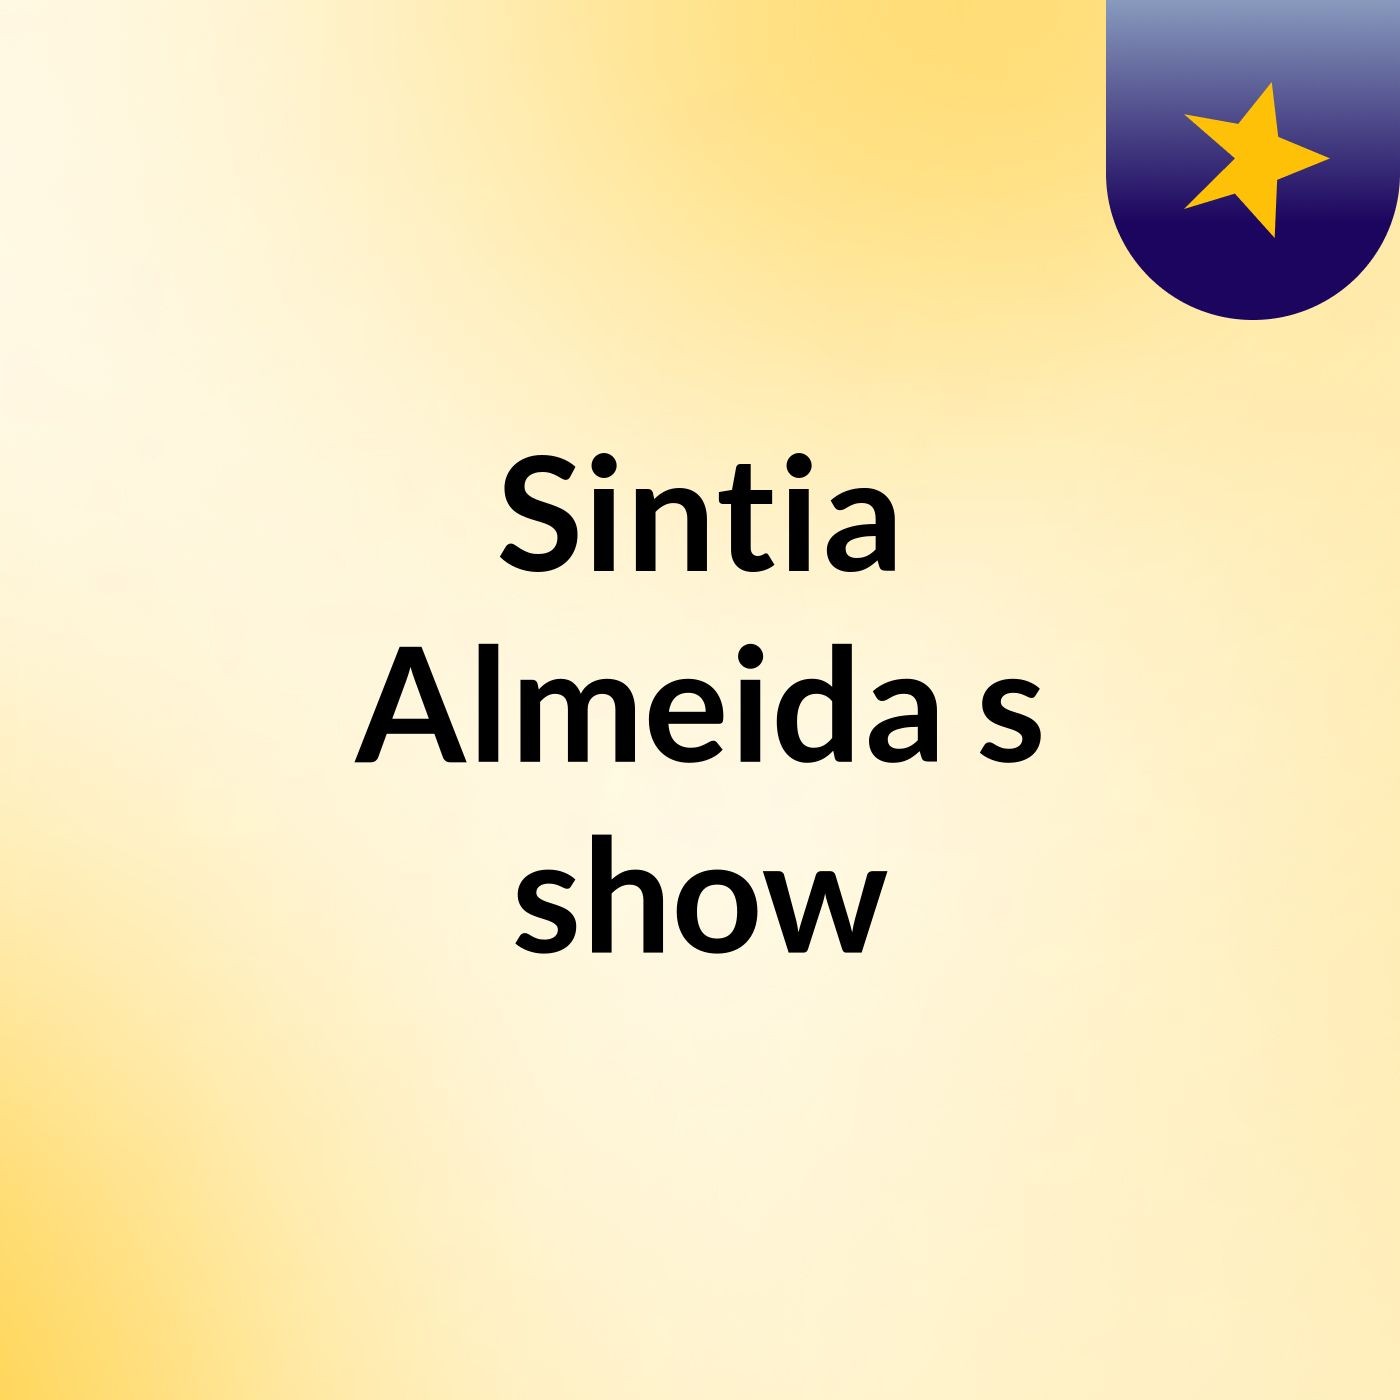 Sintia Almeida's show